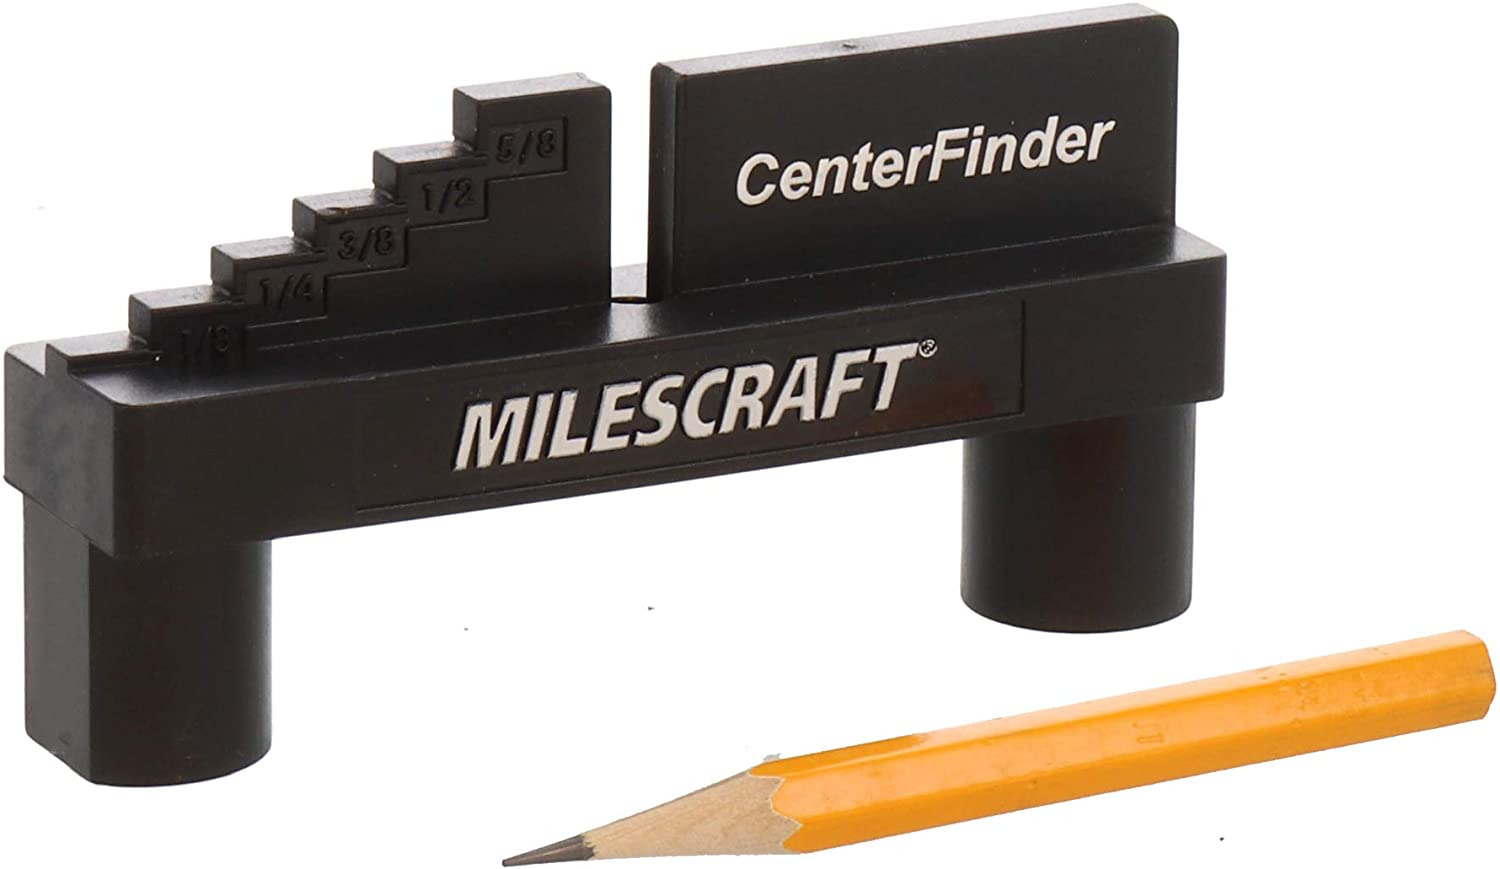 Milescraft 8408 Center Finder - Center Scriber and Offset Measuring & Marking To